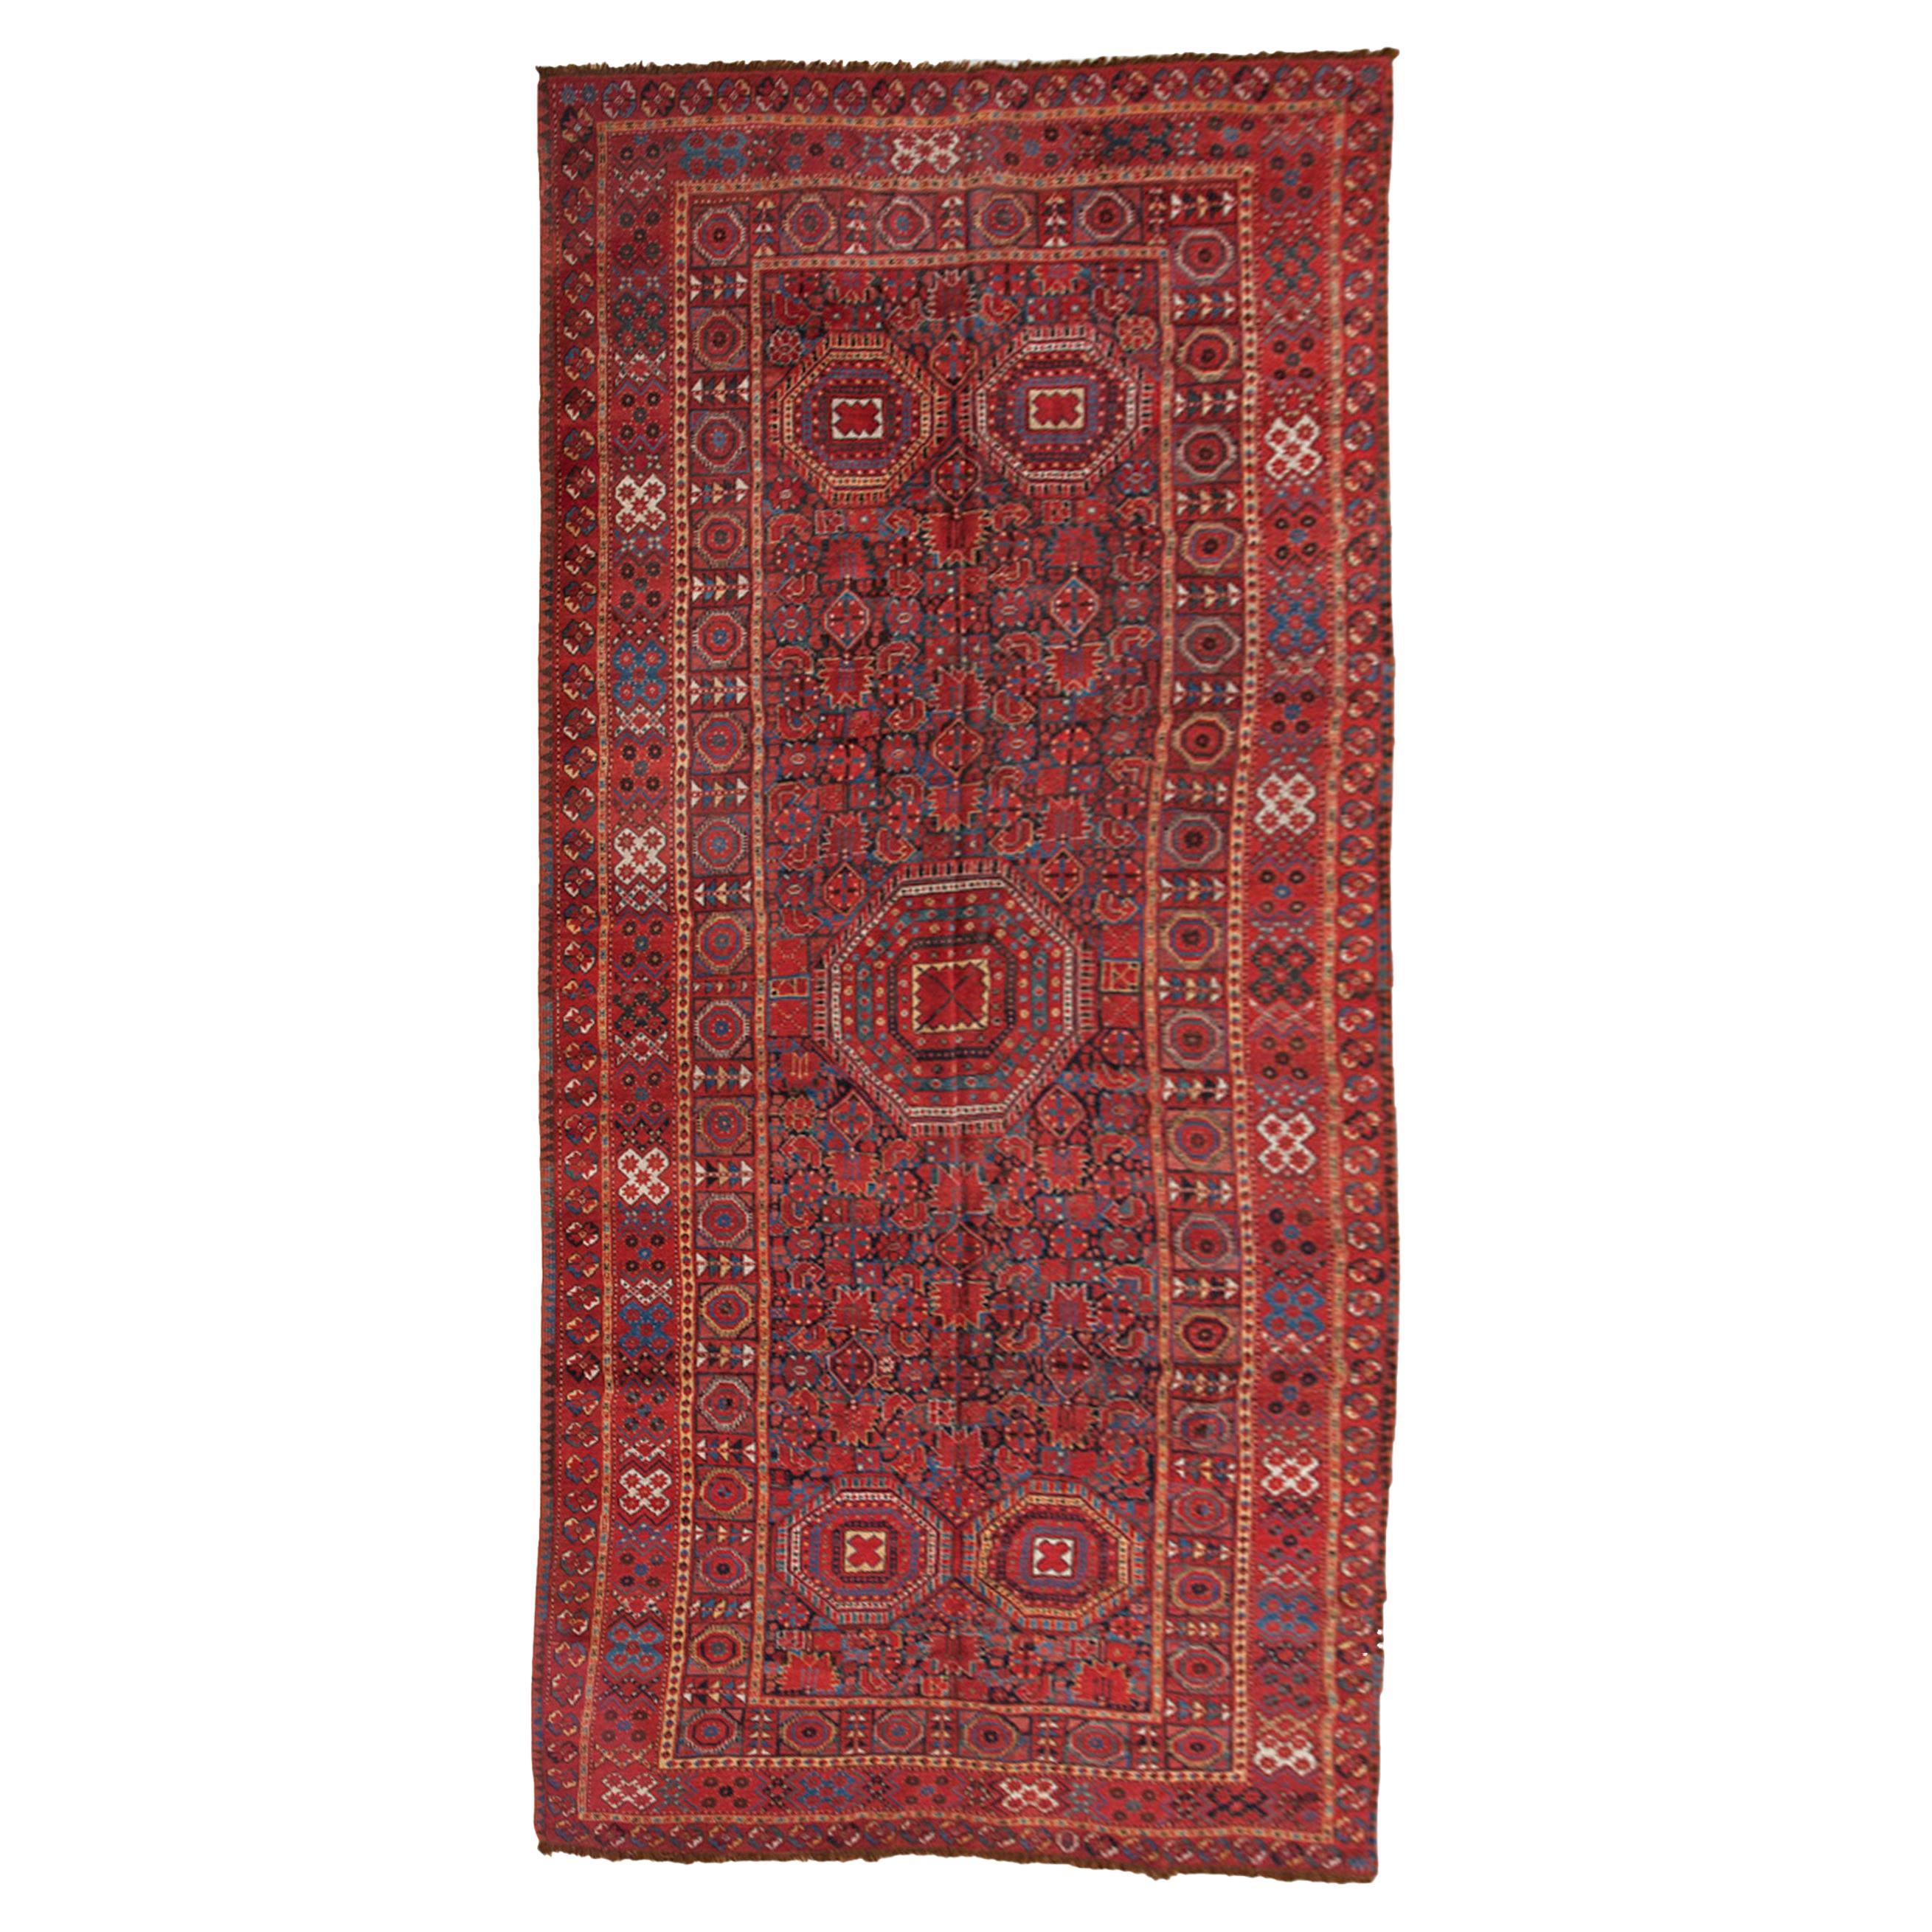 Antique Beshir Carpet, West Turkestan, Circa 1900